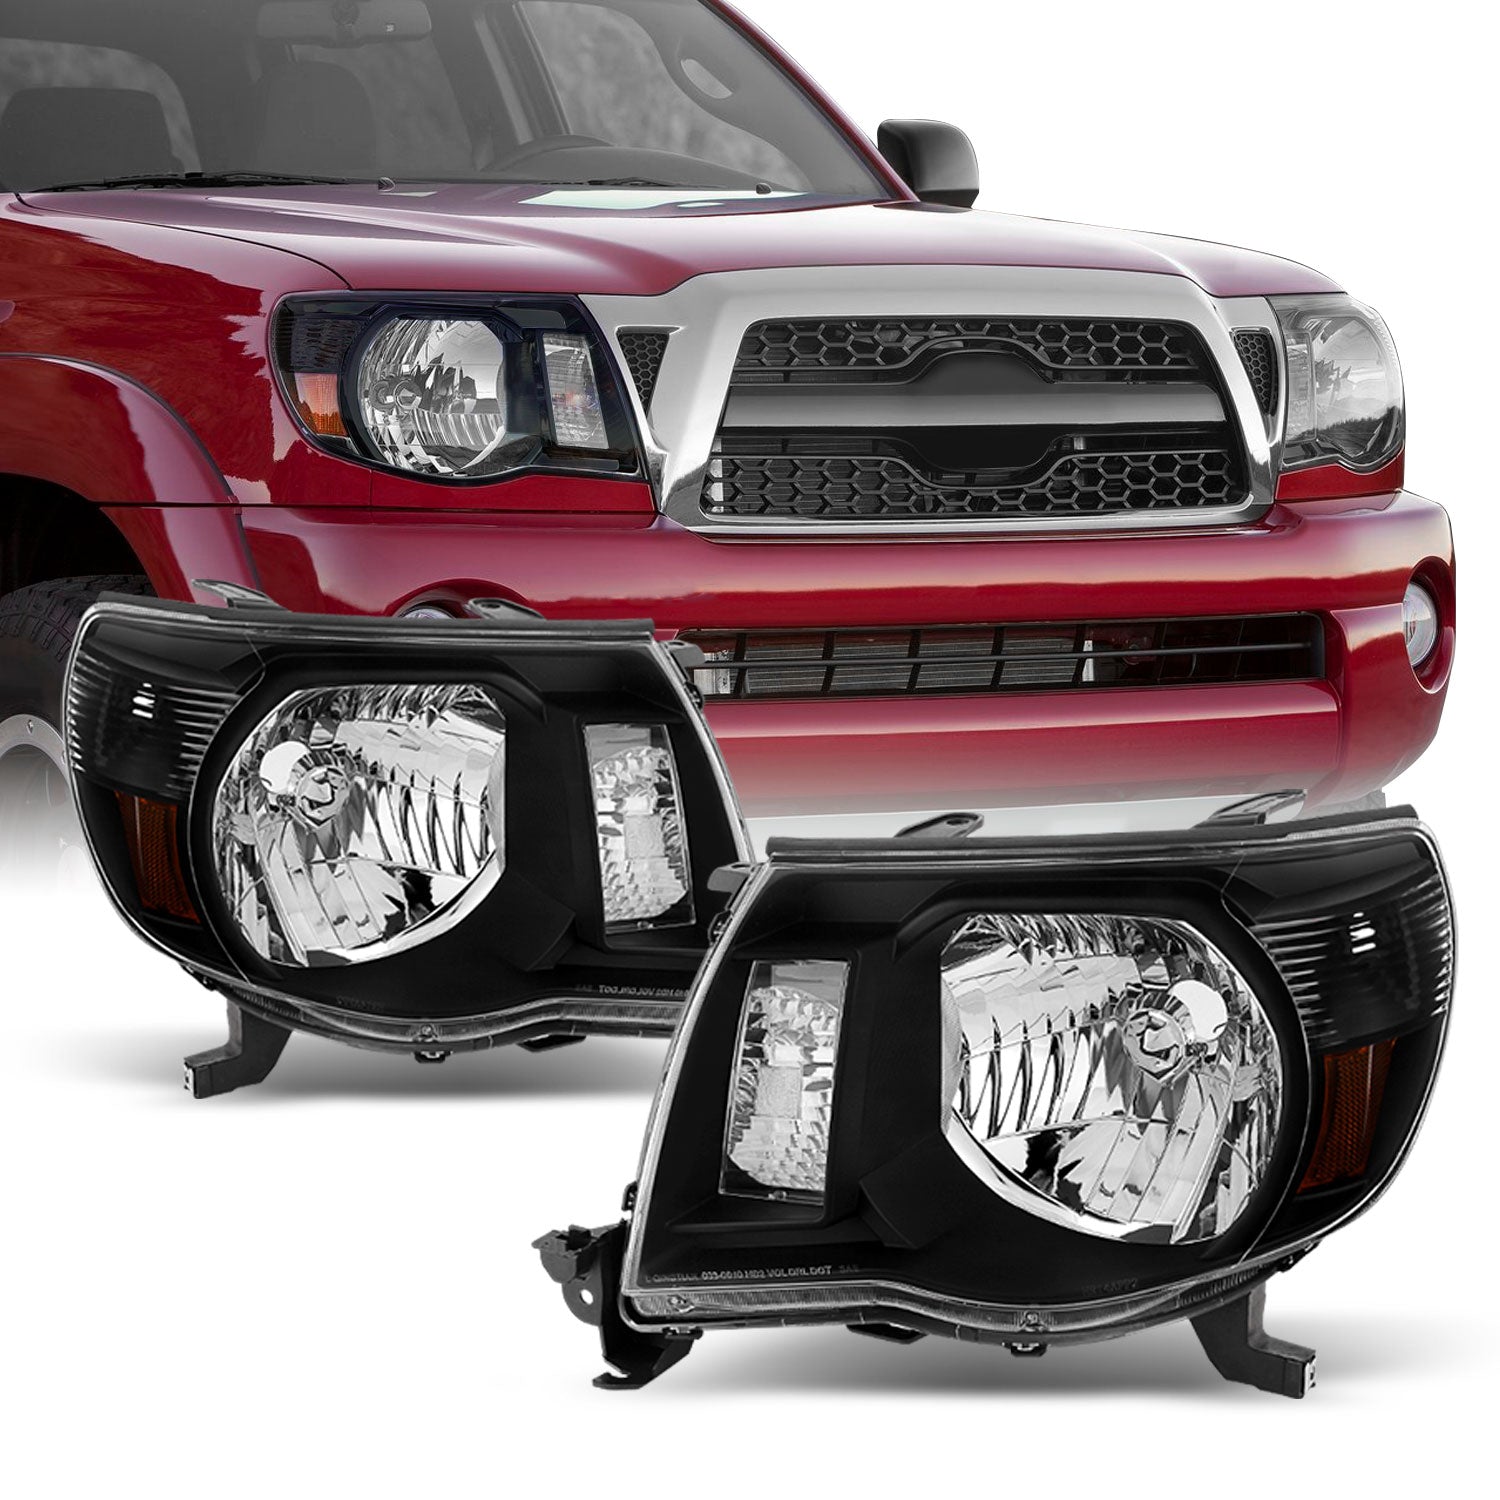 AKKON - For Toyota Tacoma Pickup Truck Black Headlights Head Lamps Rep